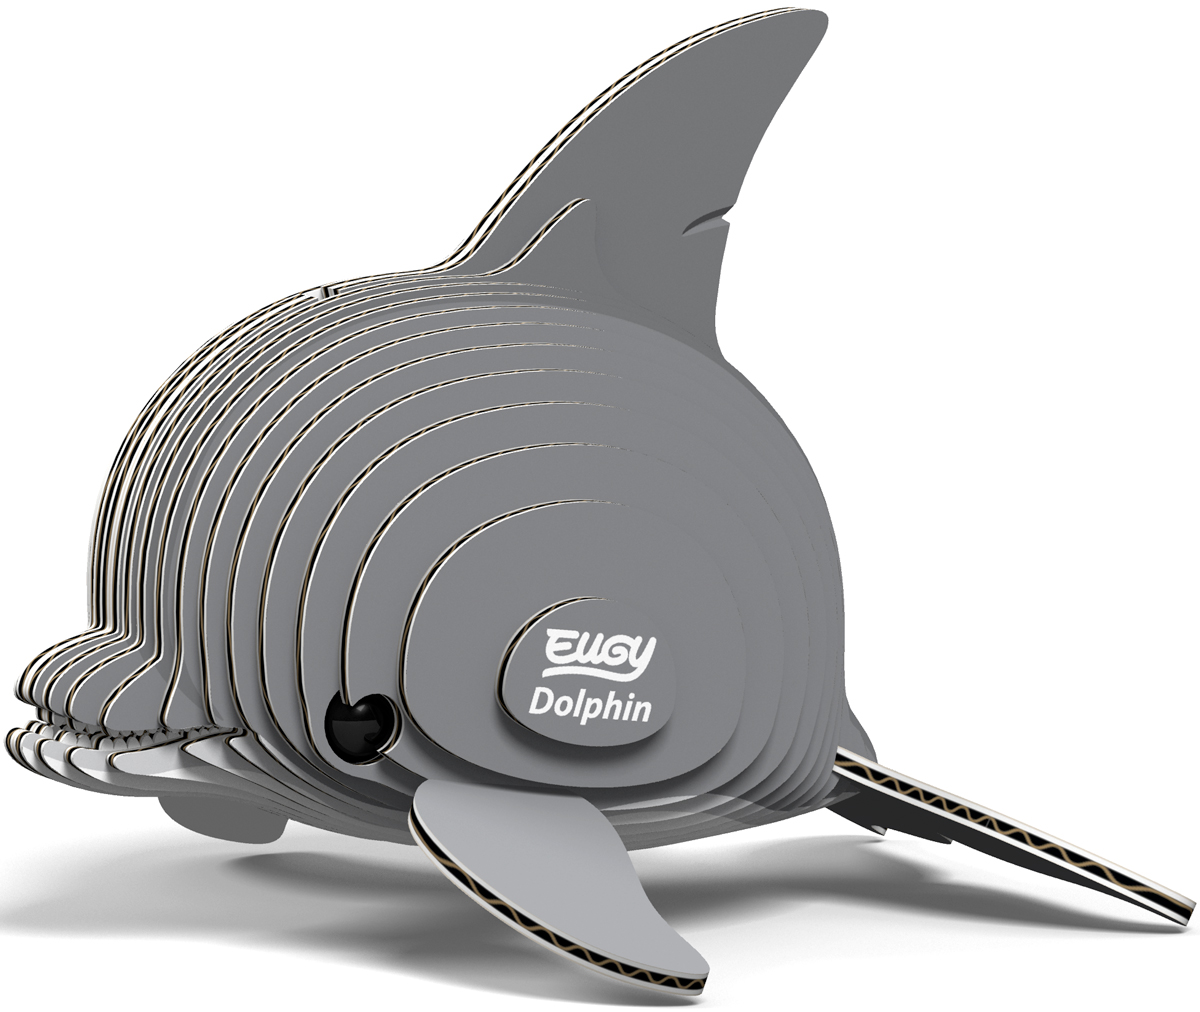 Dolphin Eugy Dolphin 3D Puzzle